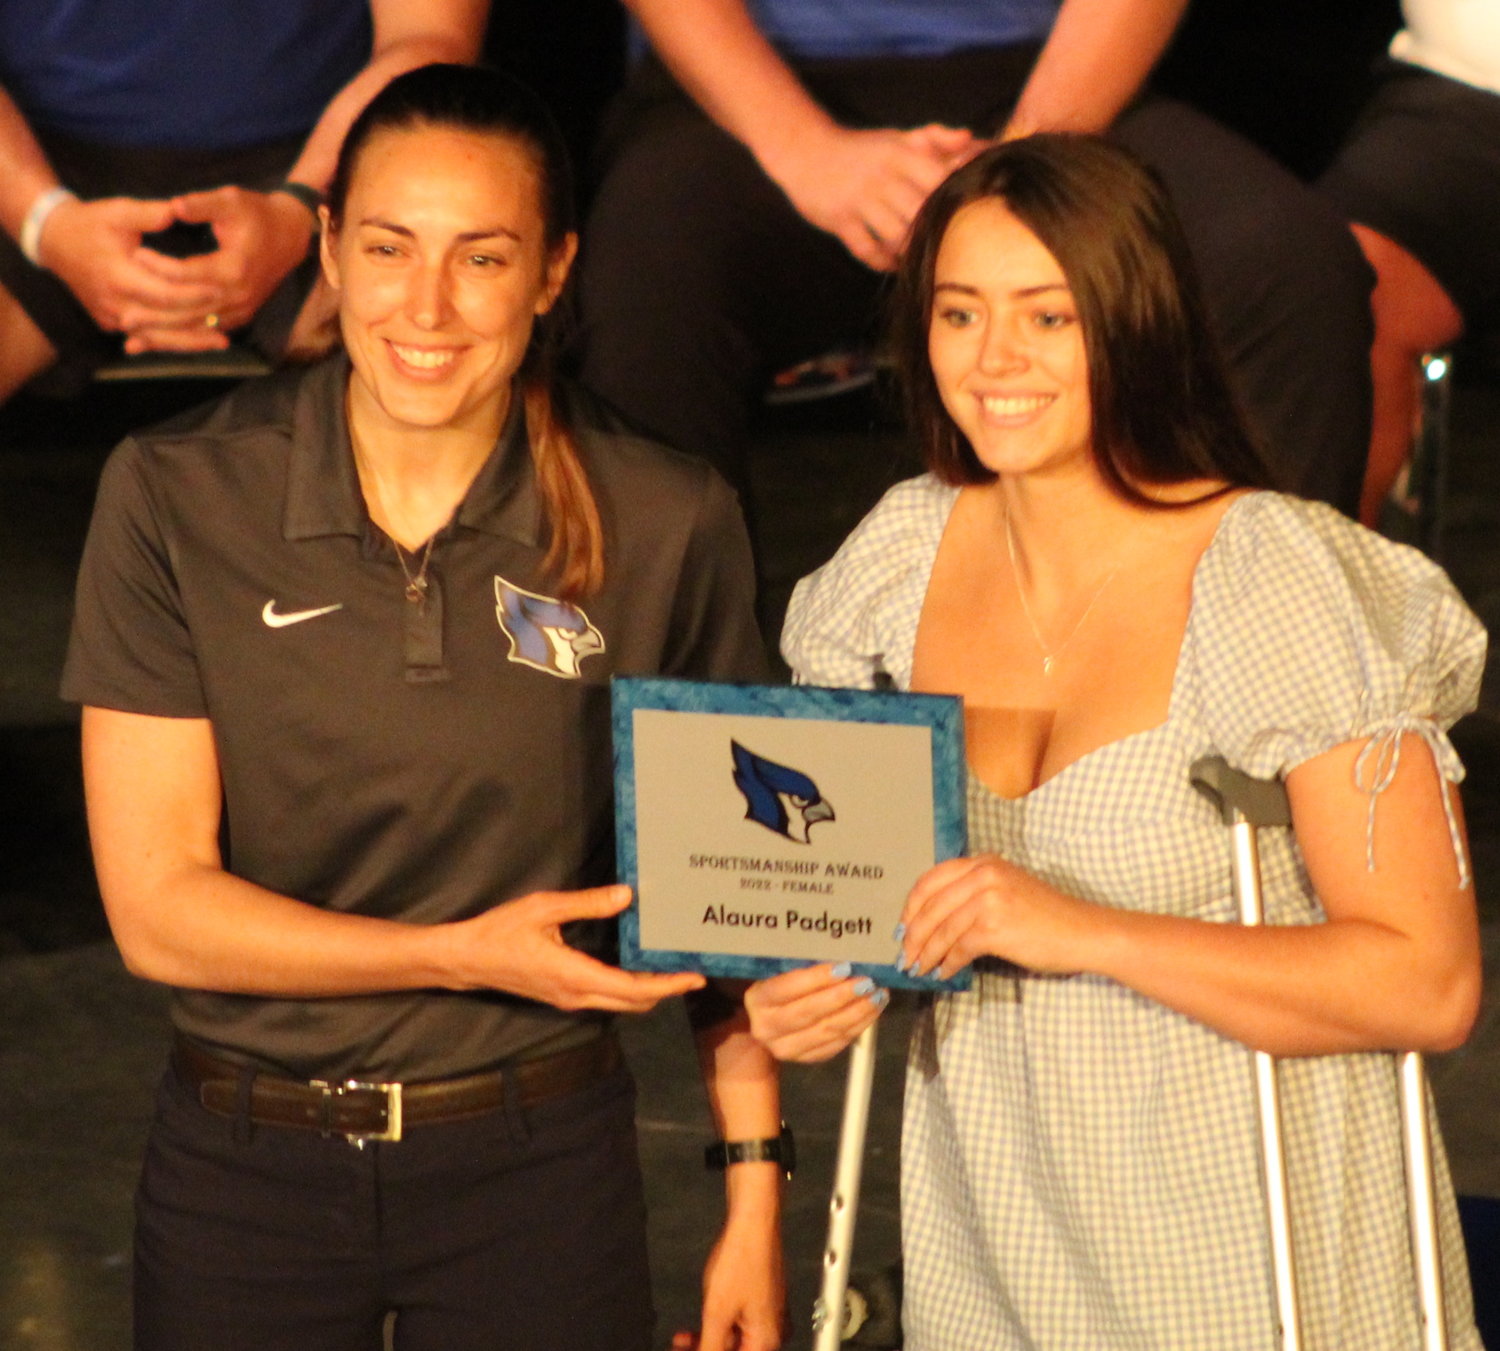 (Left to right) Katie Prichard and Sportsmanship Award recipient Alaura Padgett.